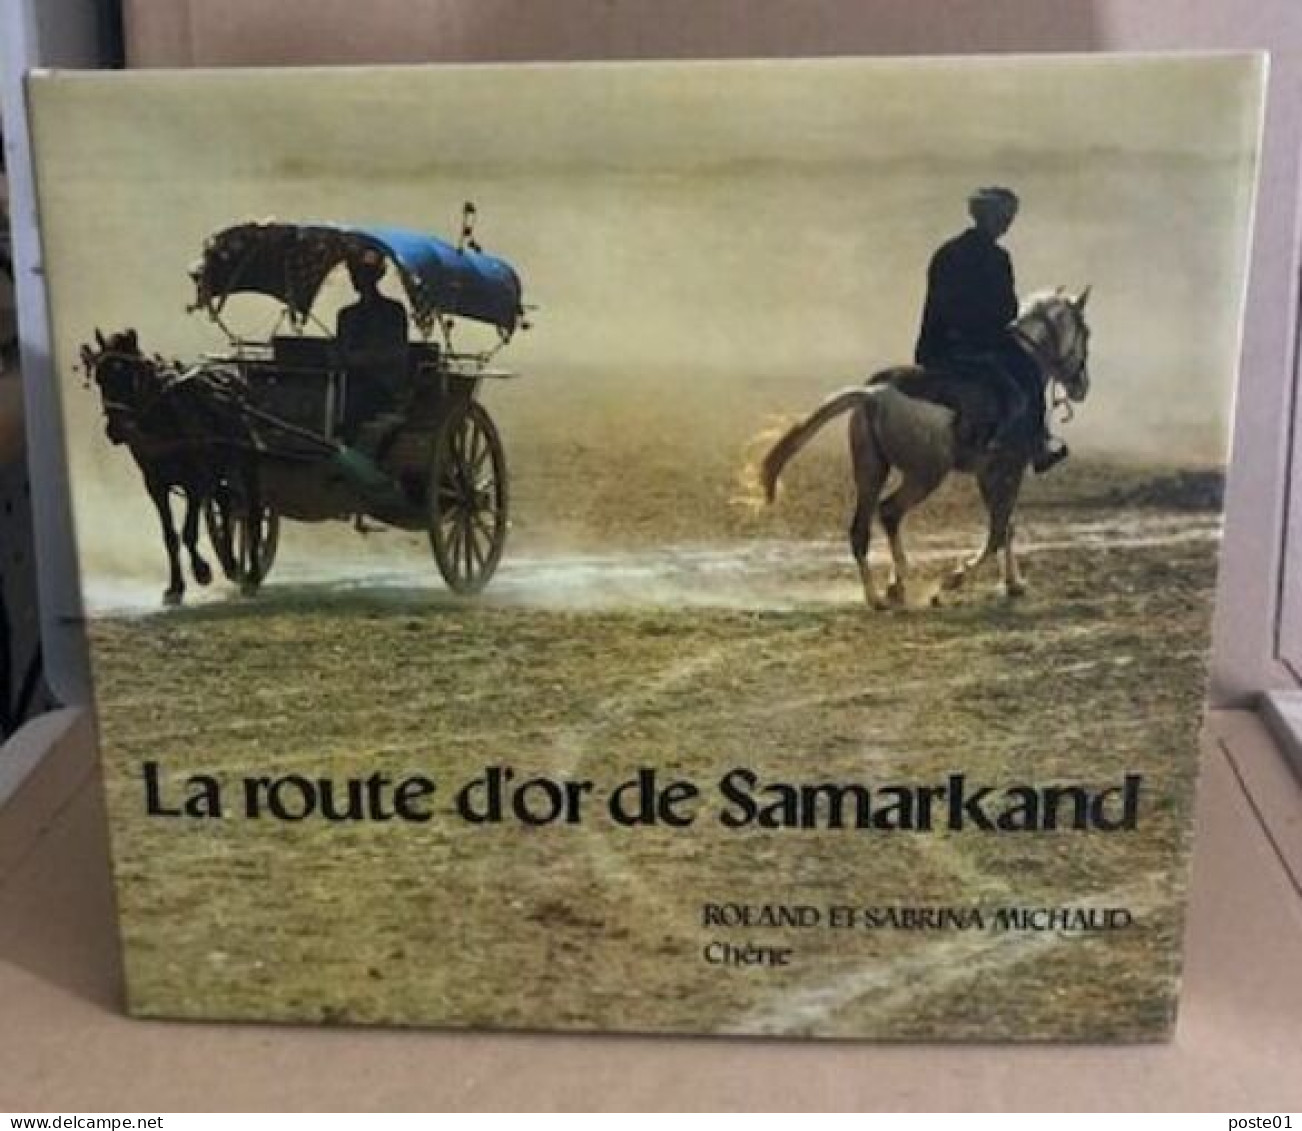 La Route D'or De Samarkand - Art